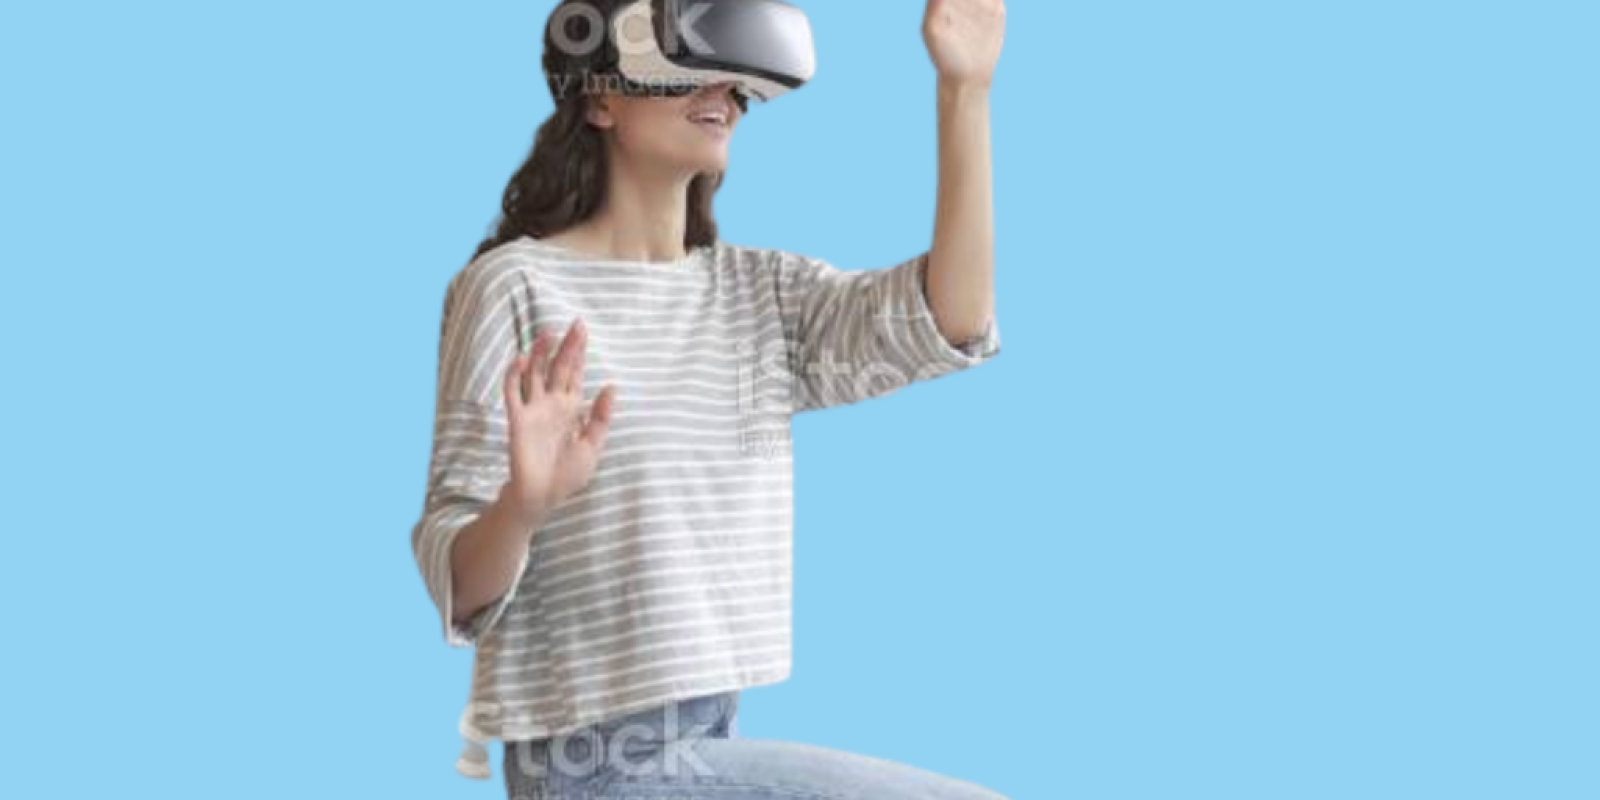 World of Virtual Reality